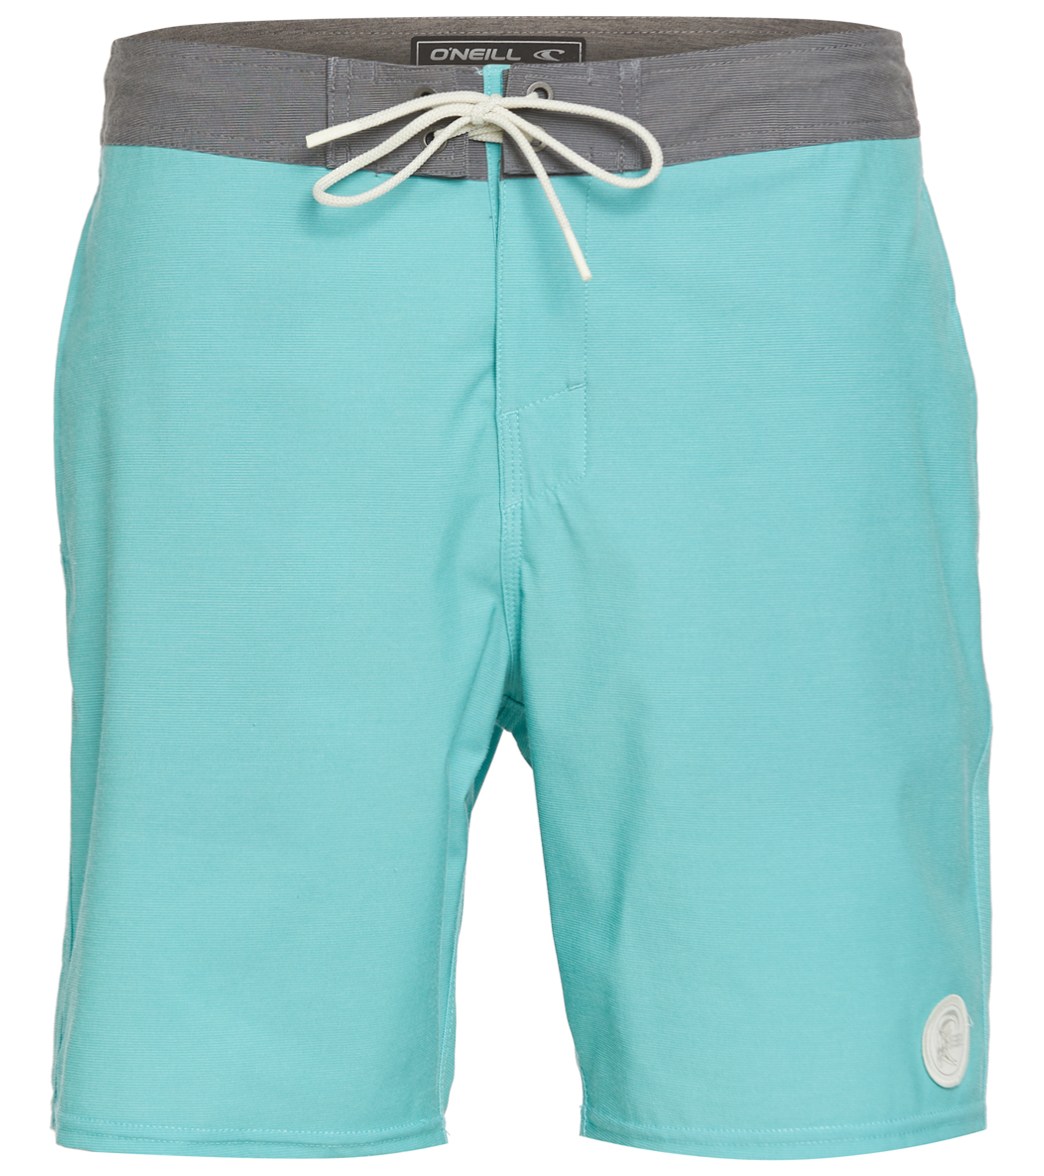 O'neill Men's 18 Staple Cruzer Board Short - Aqua Blue 28 Cotton/Polyester - Swimoutlet.com